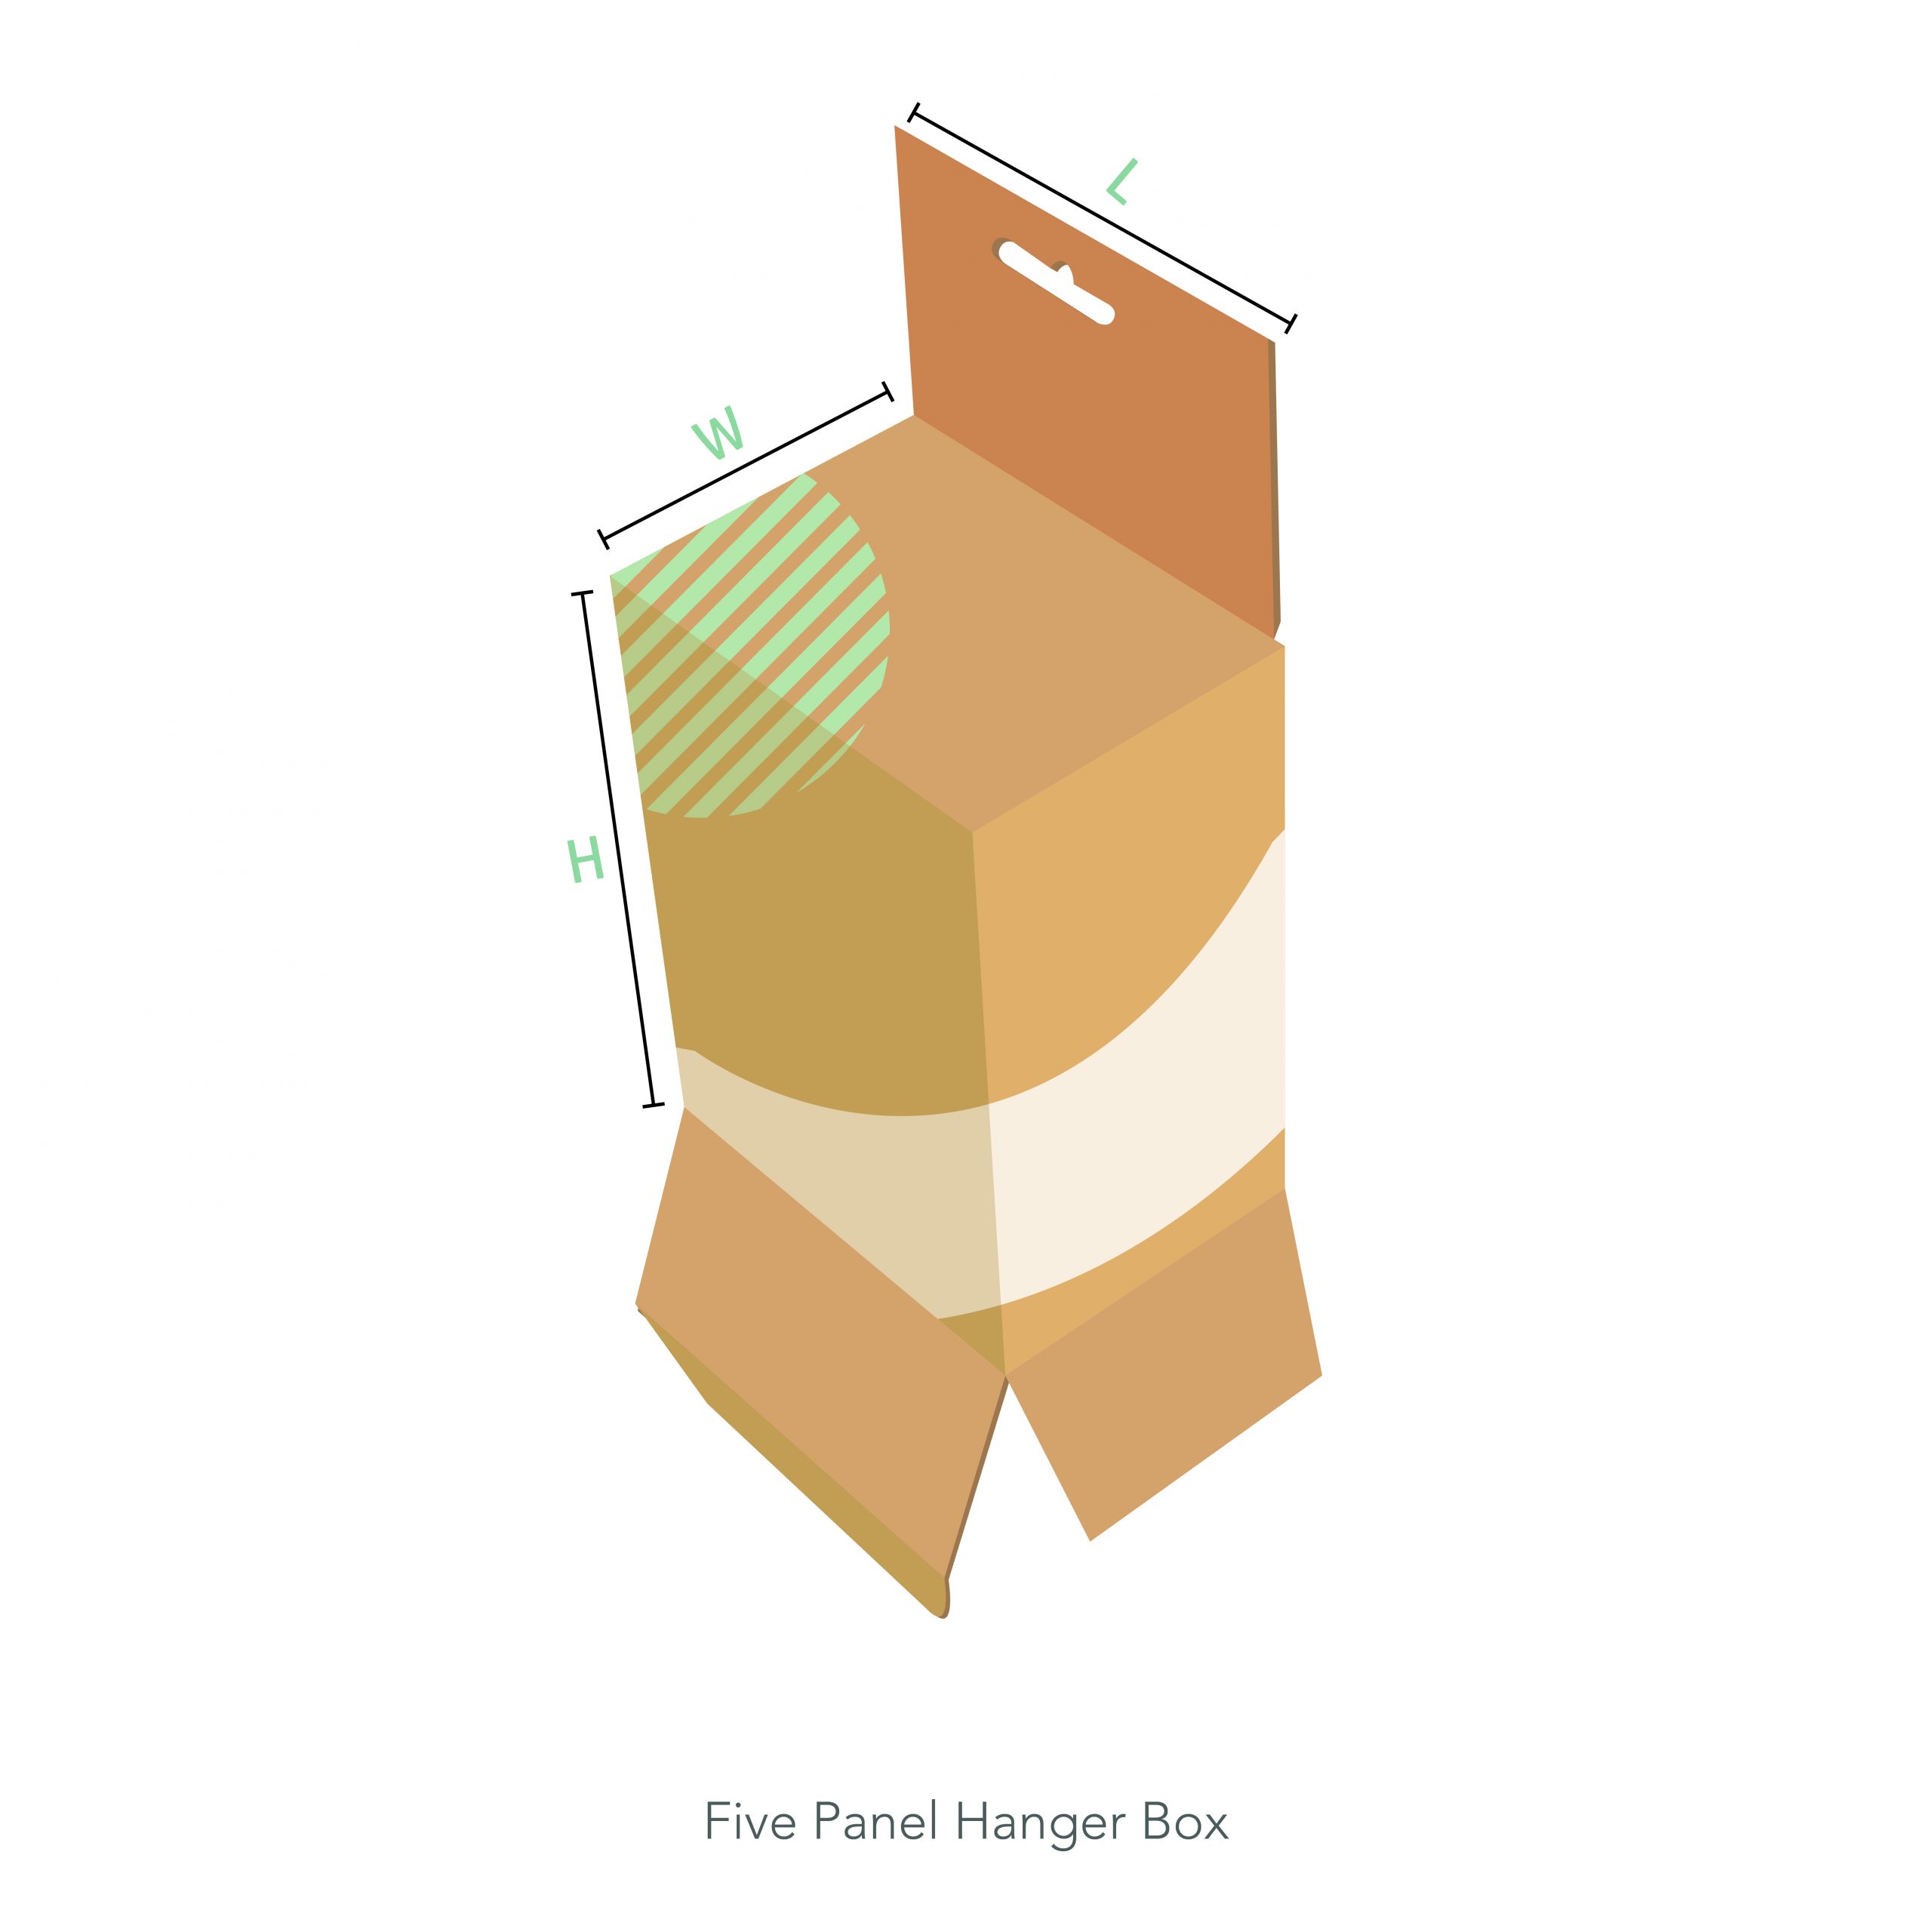 Five Panel Hanger Box 2